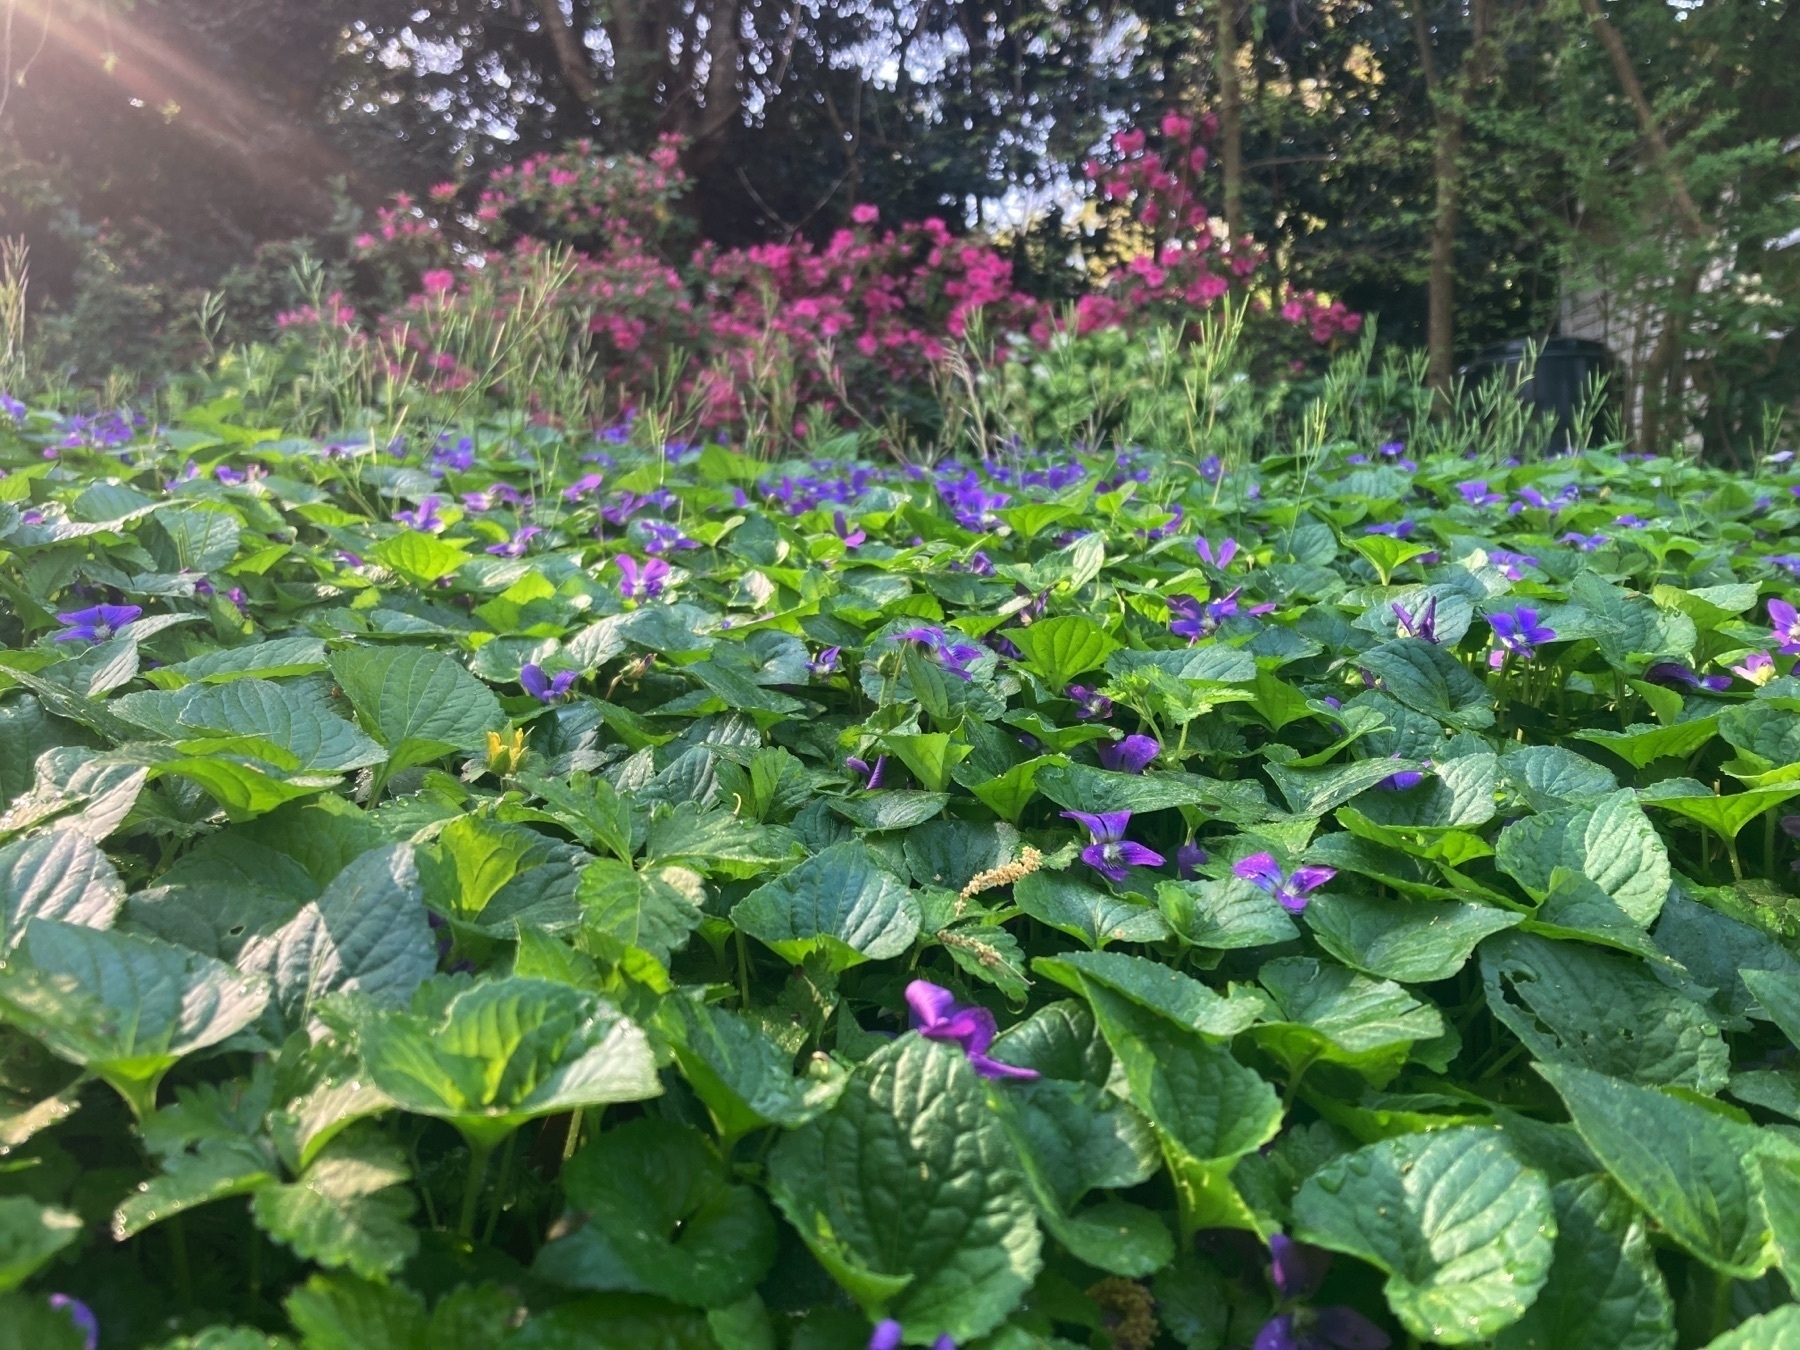 a field of violets in morning sunlight